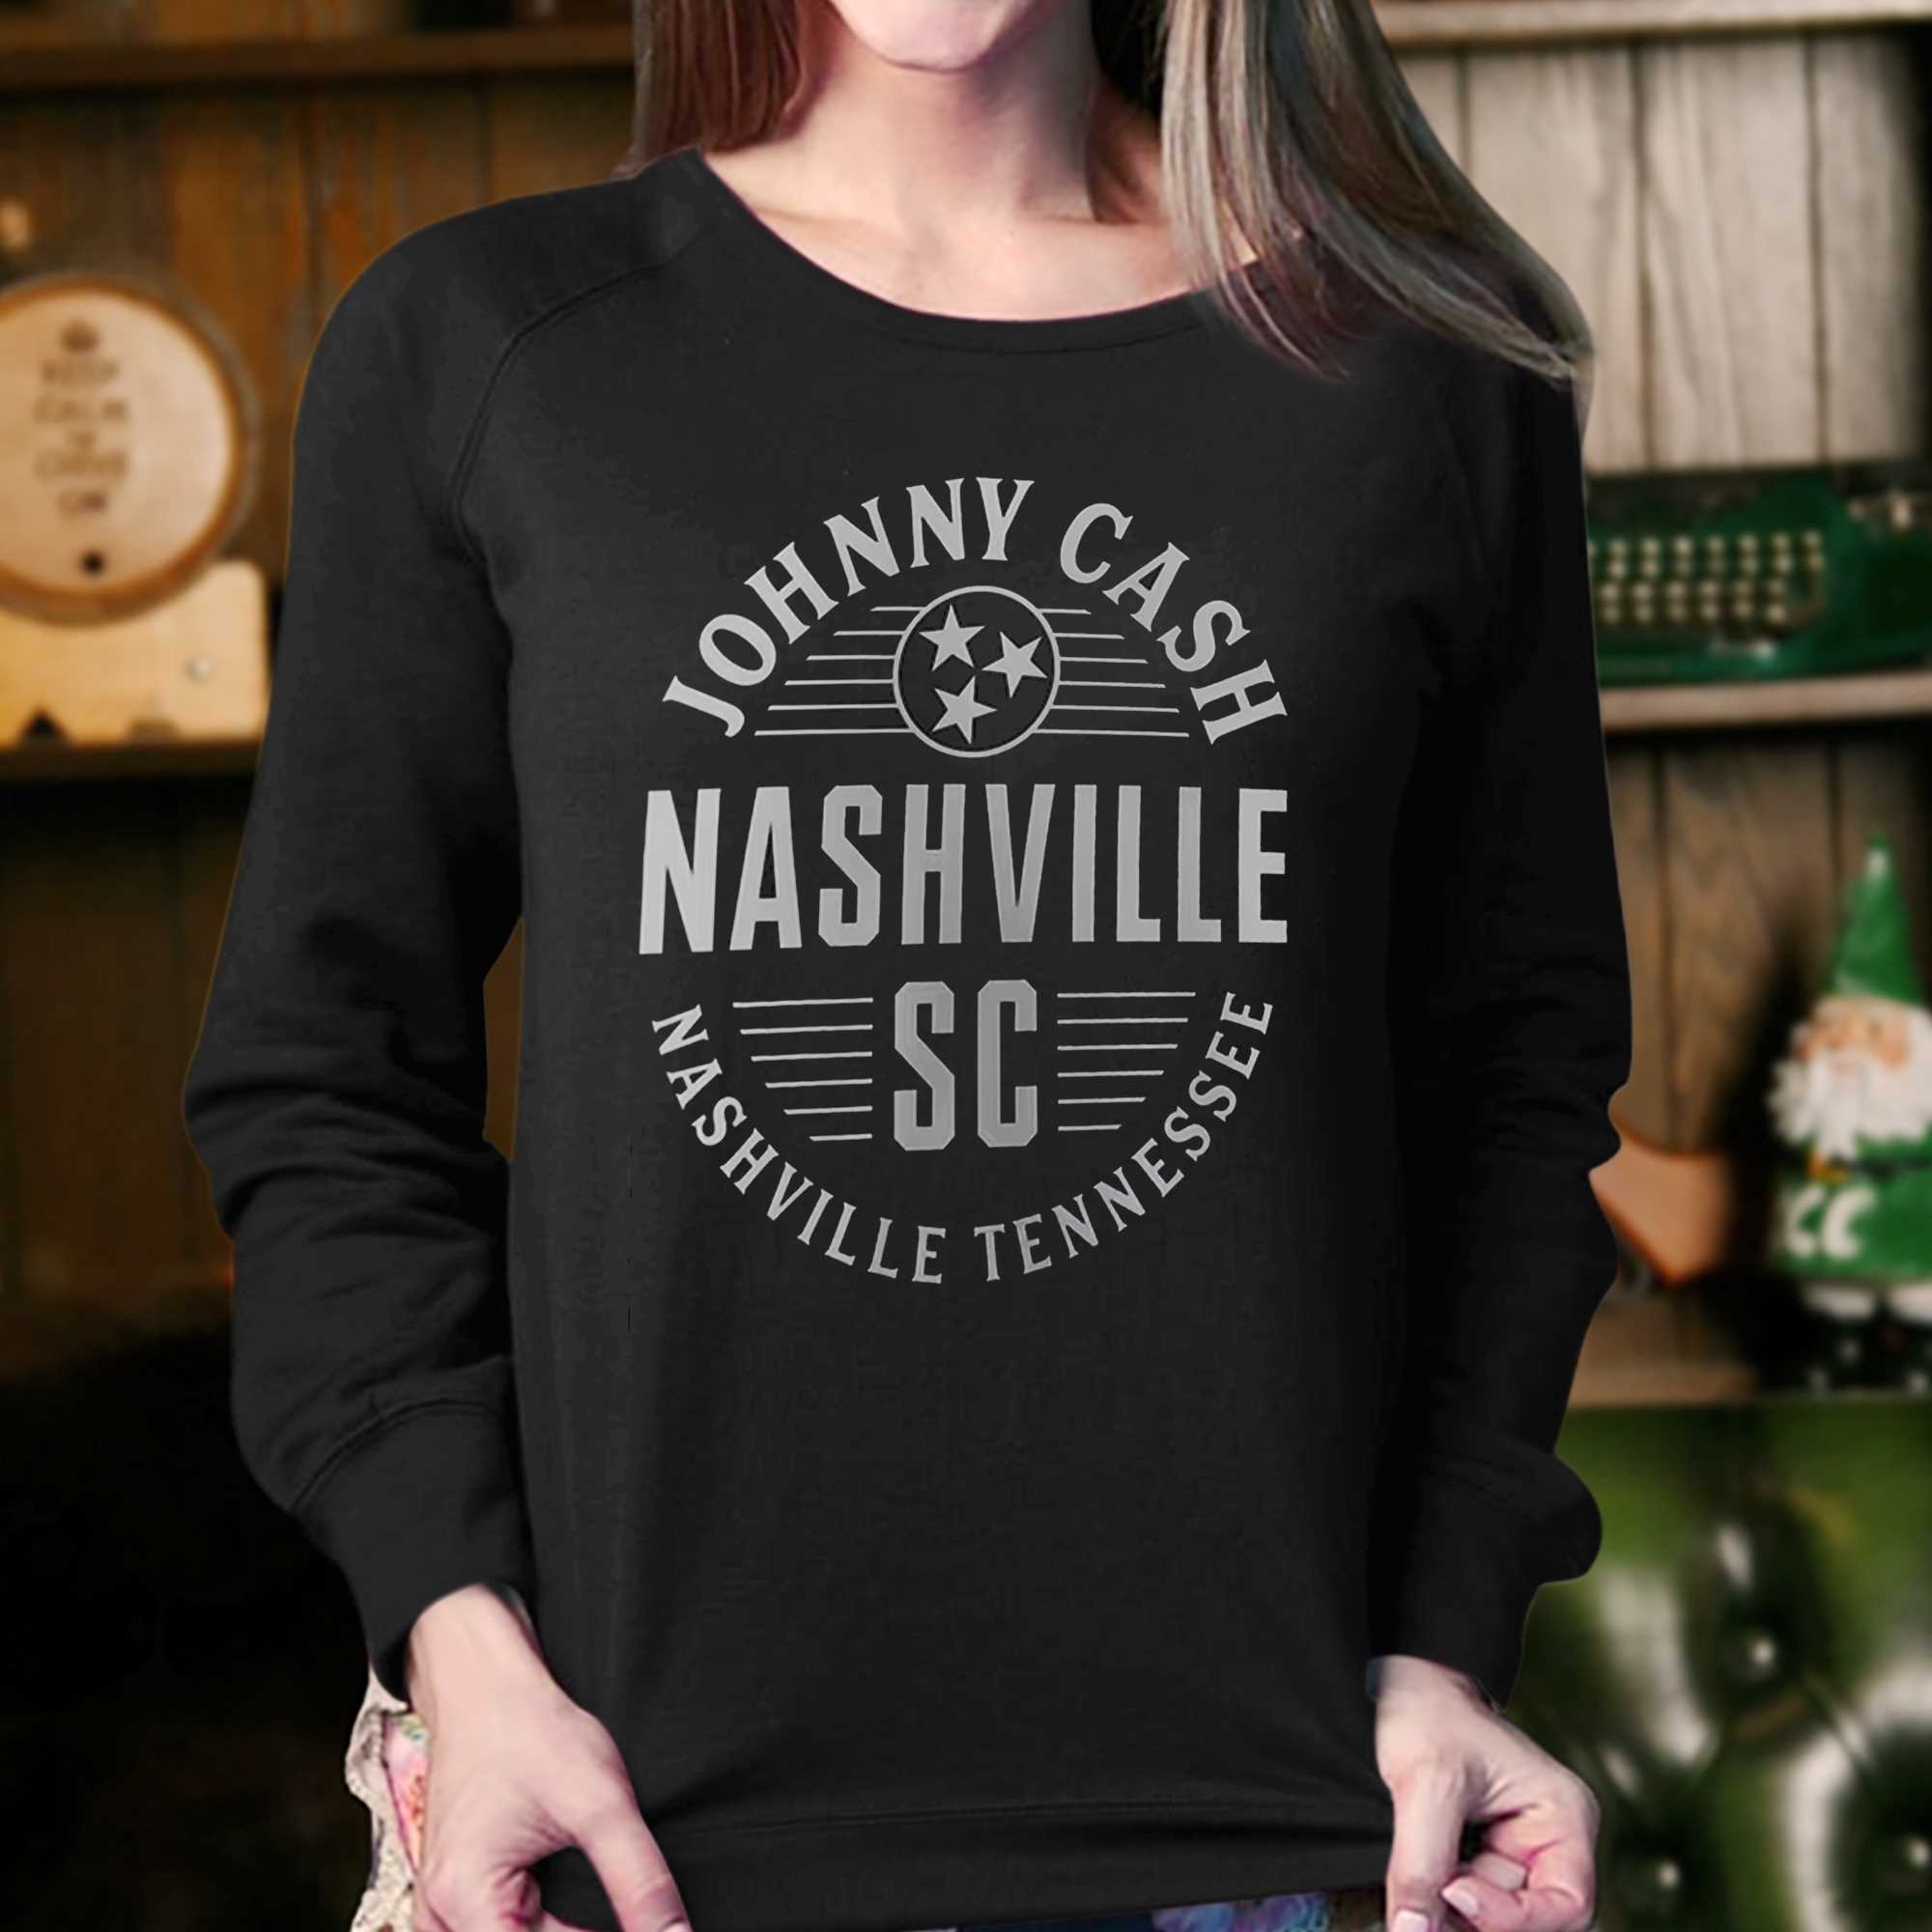 Nashville Sc Fanatics Branded Johnny Cash Oval T-shirt 